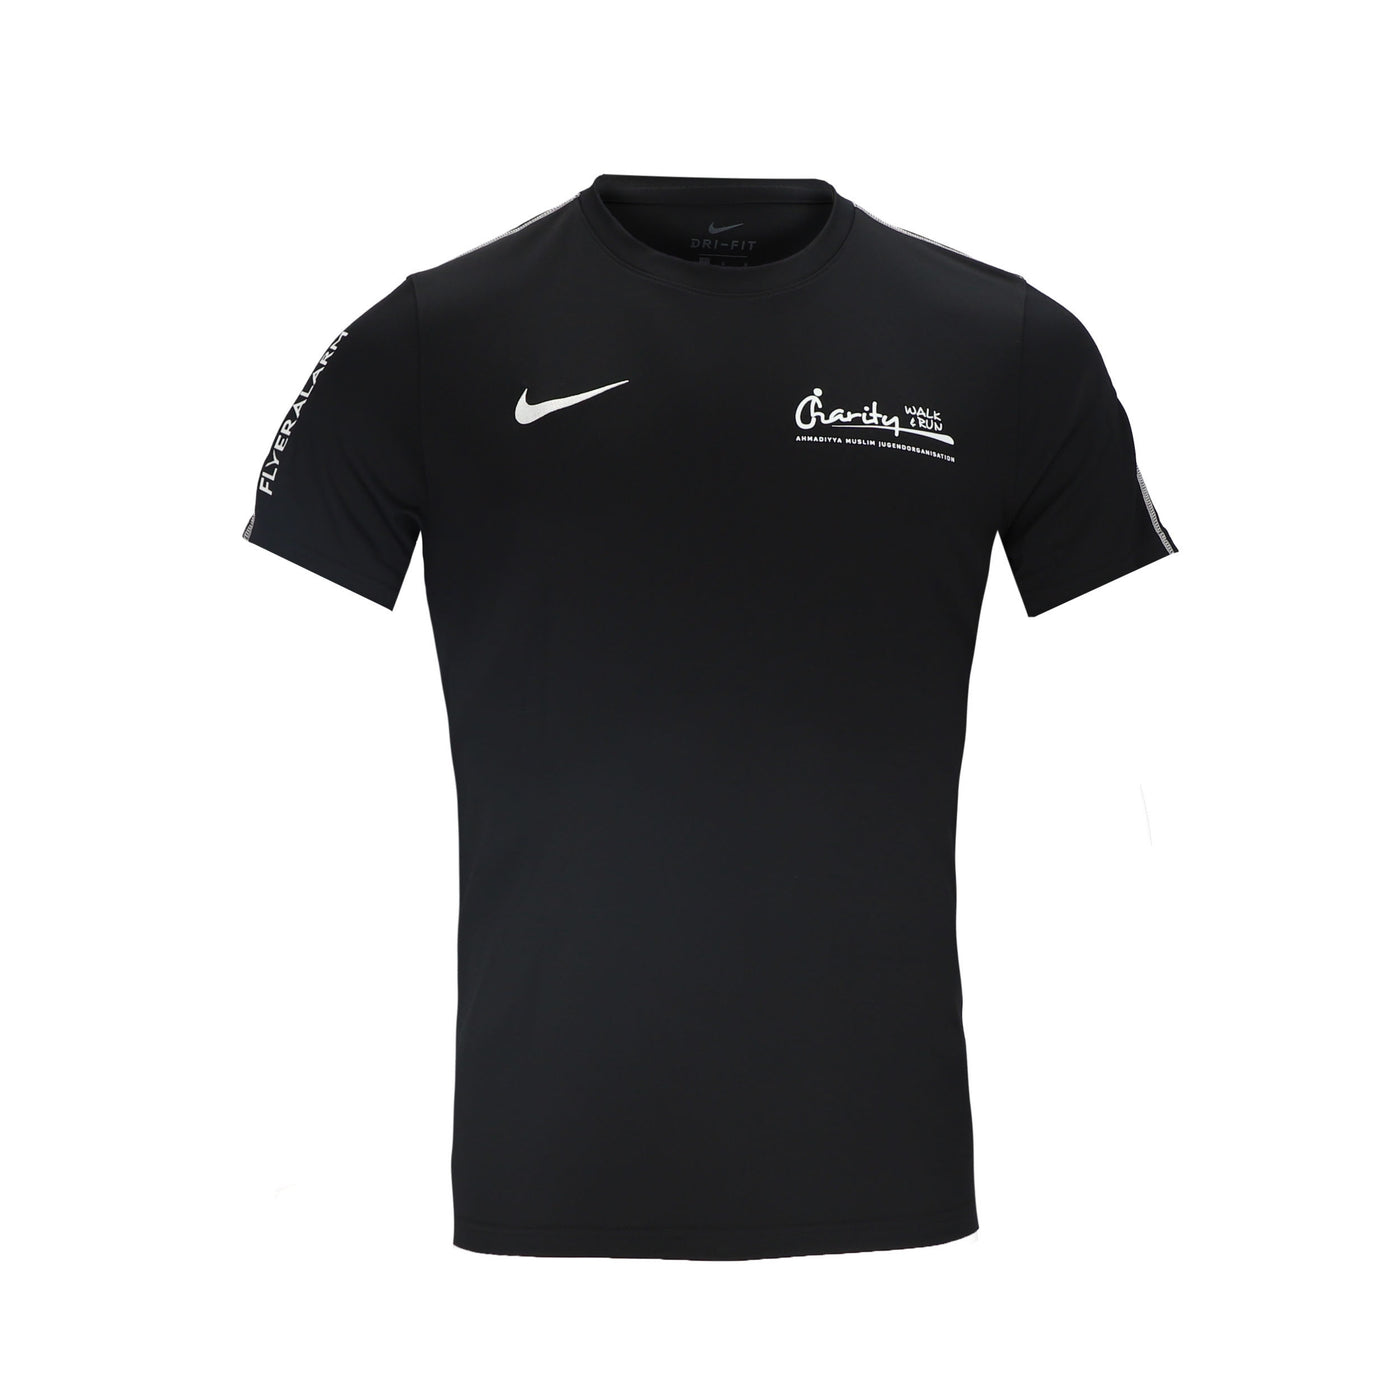 Nike Charity Walk Laufshirt schwarz